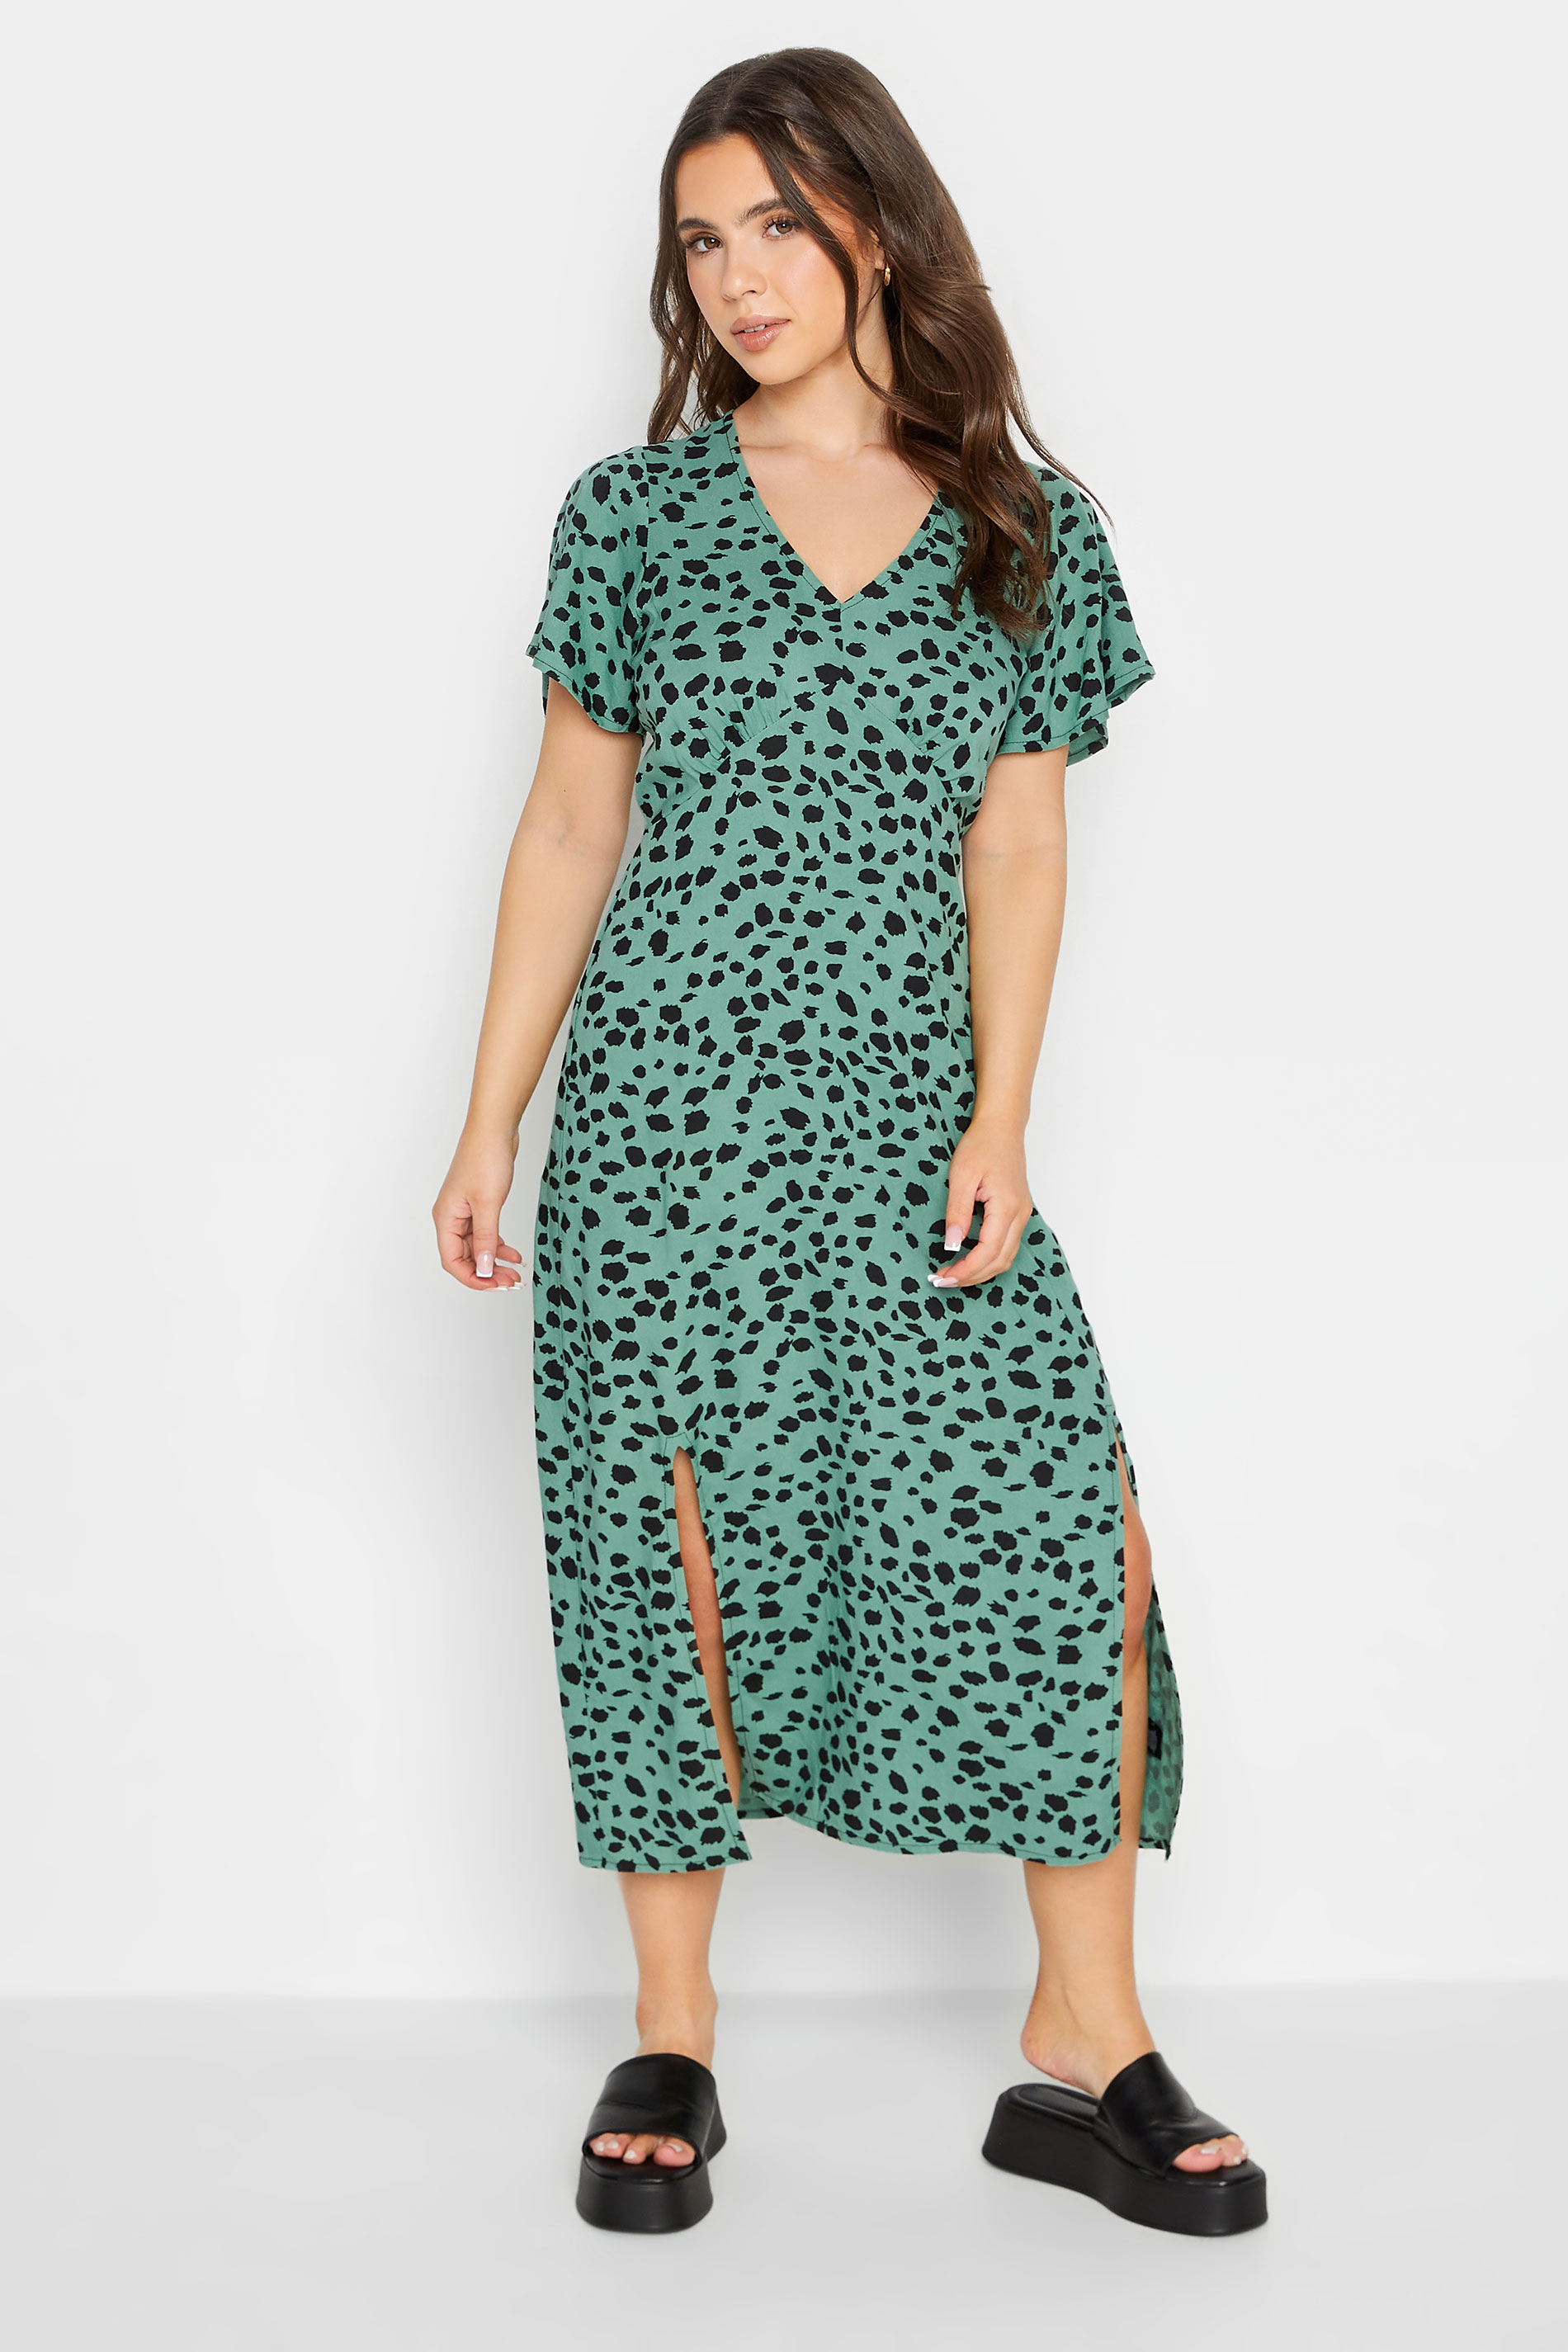 PixieGirl Green Leopard Print Tea Dress | PixieGirl  1